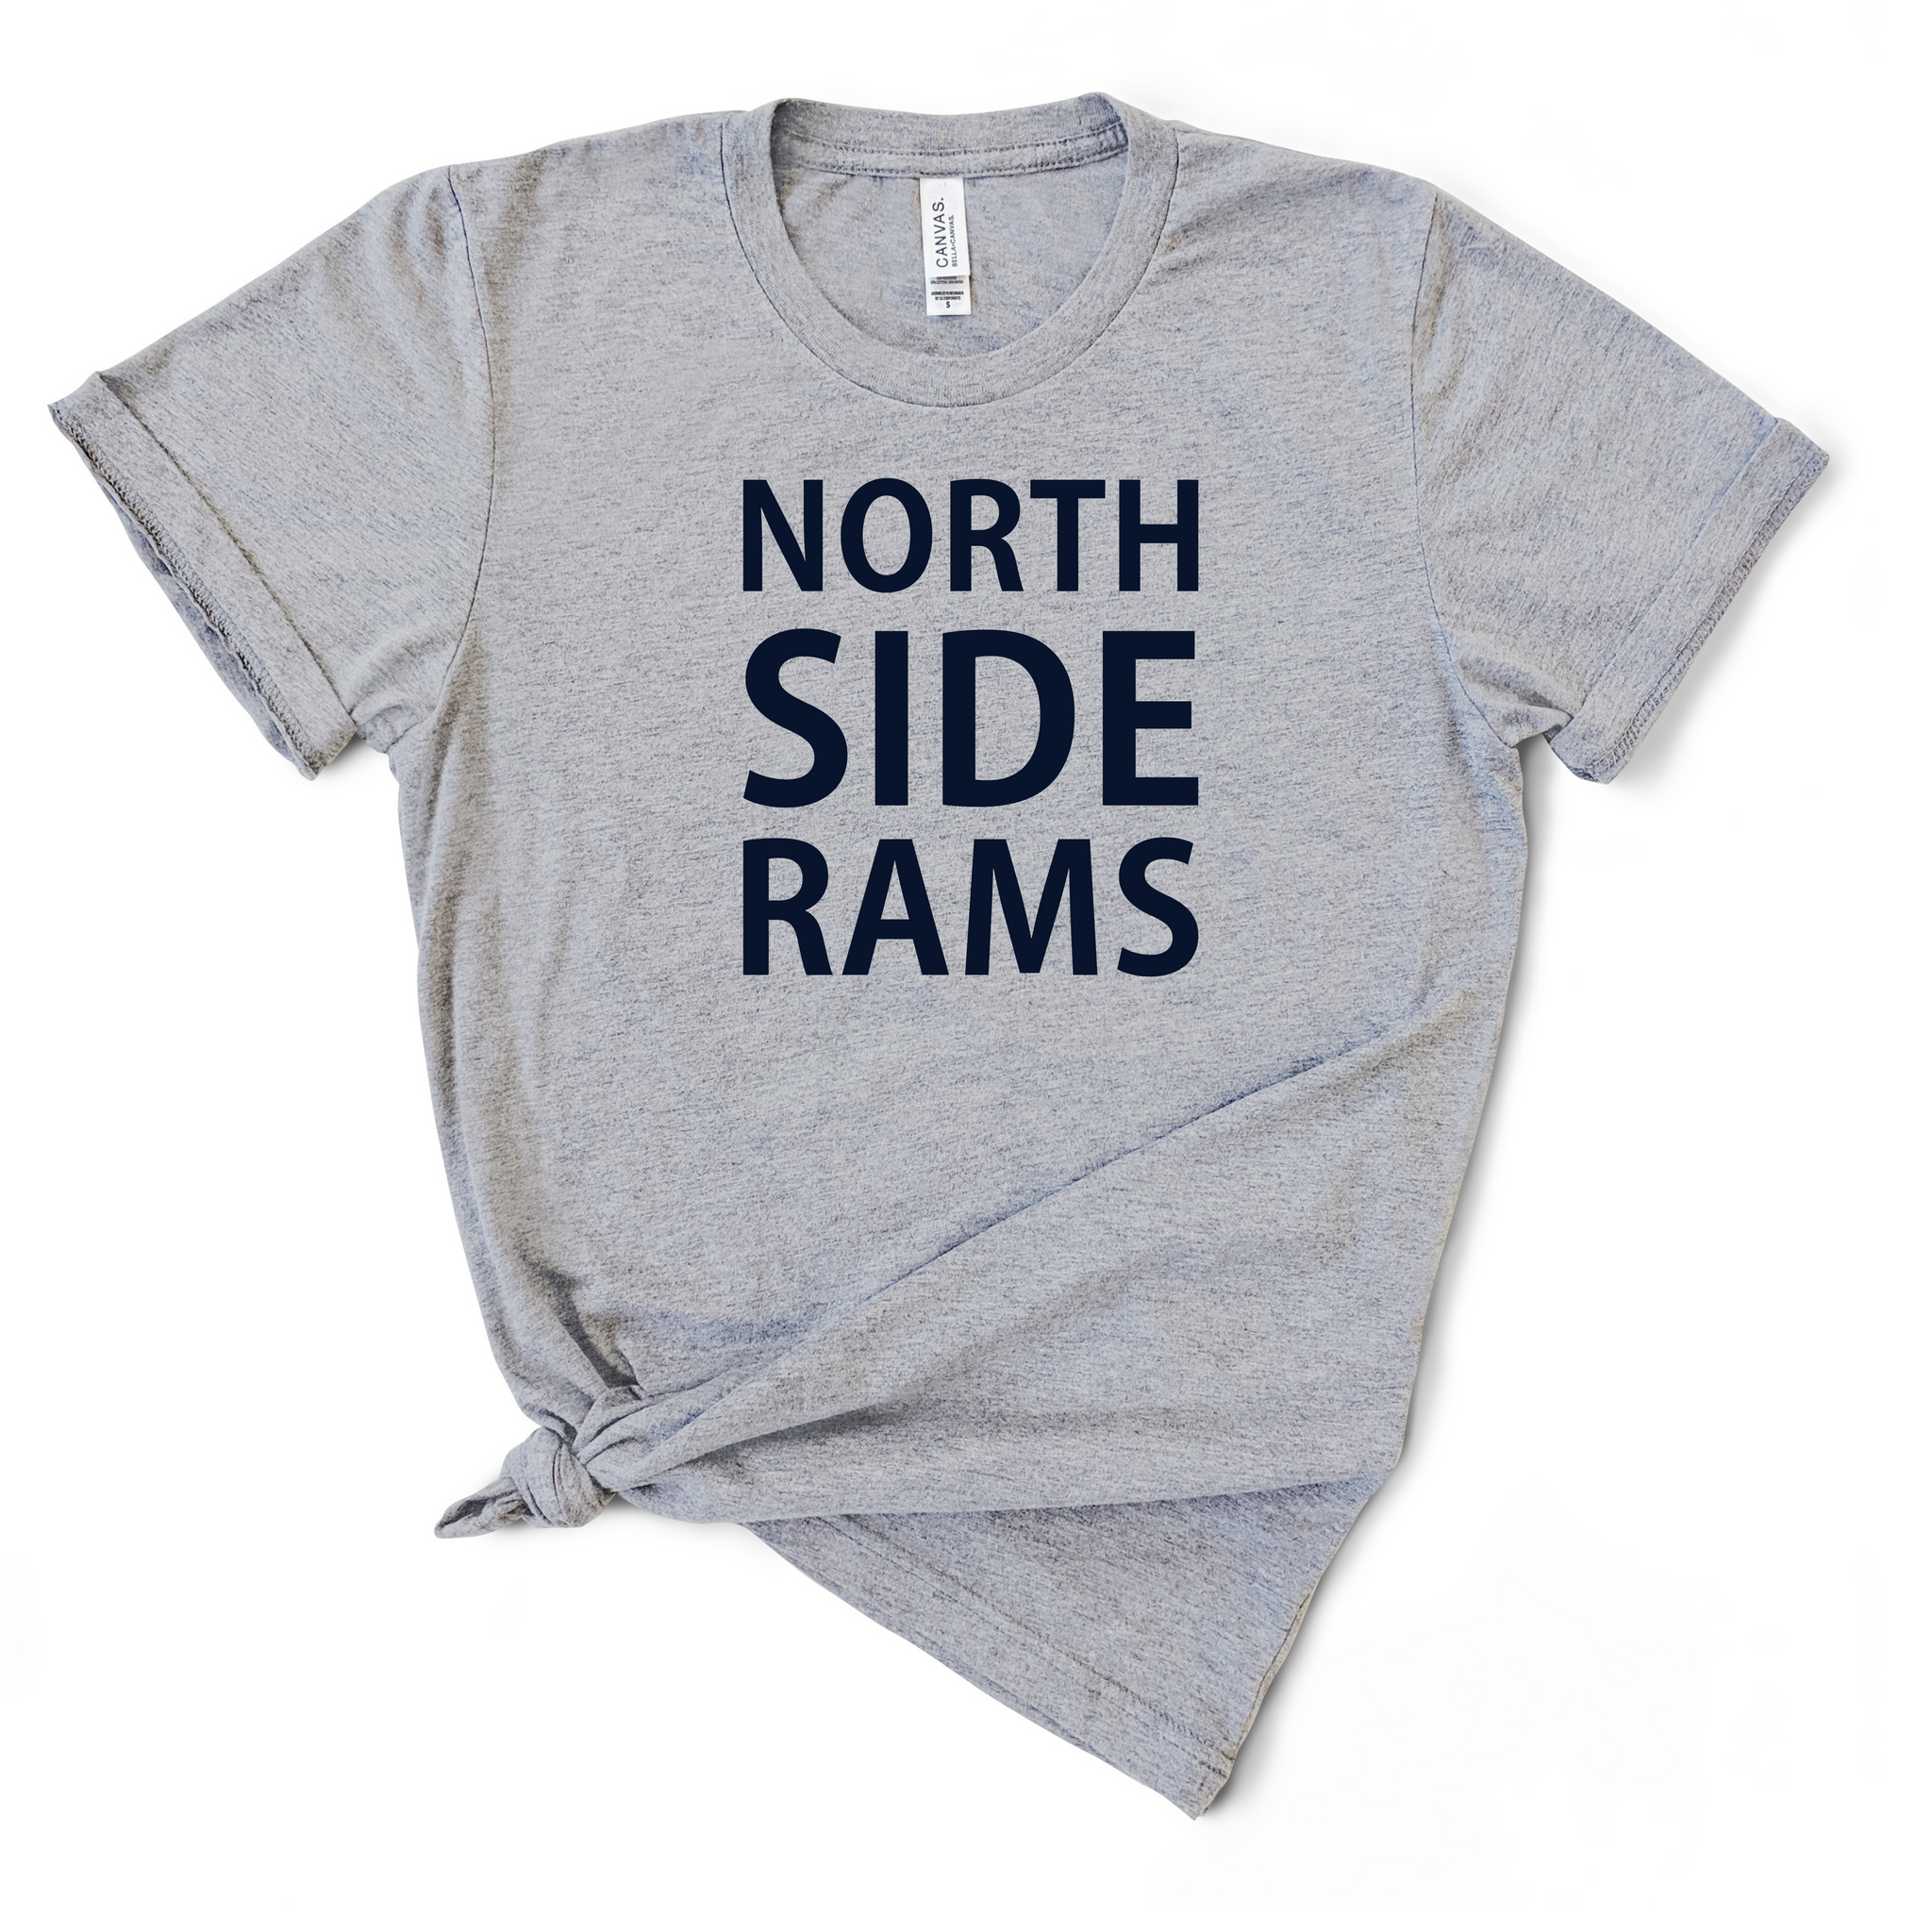 Northside Rams - Stacked Text Short Sleeve Unisex Tshirt Grey 679